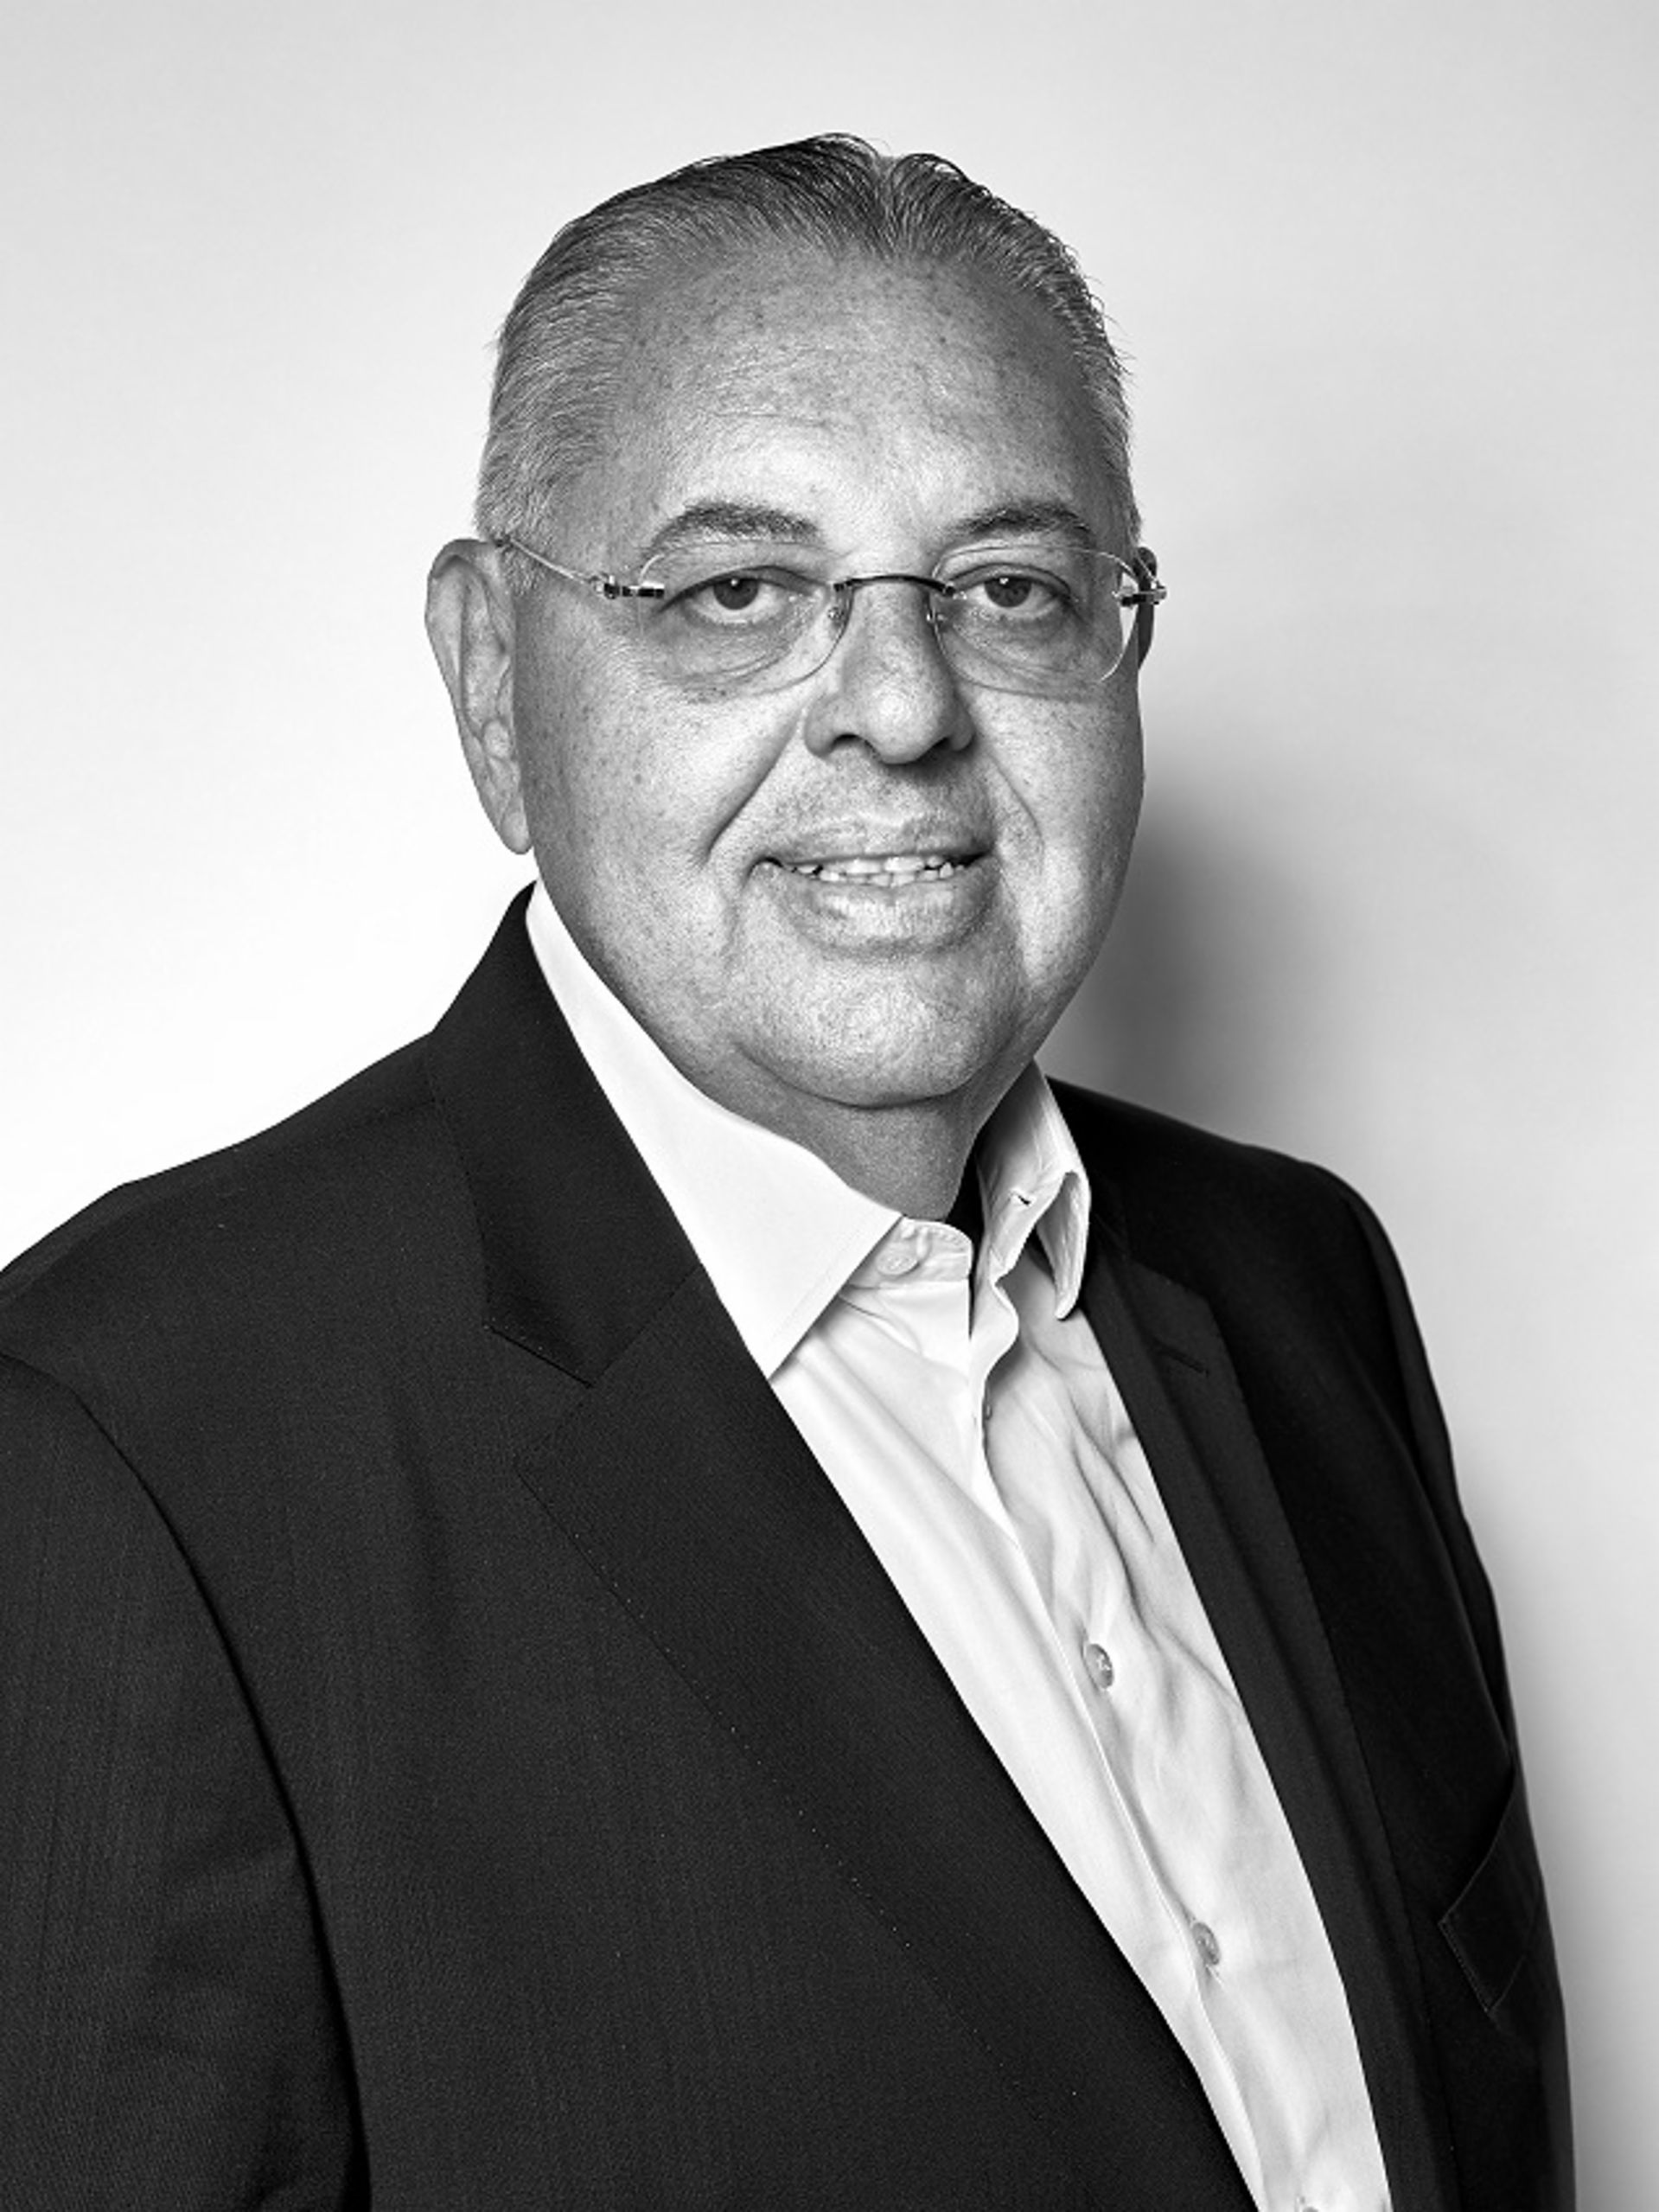  black and white portrait of Antonio Roberto Cortes, Member of the Executive Board of TRATON SE, Chief Executive Officer Volkswagen Caminhões e Ônibus